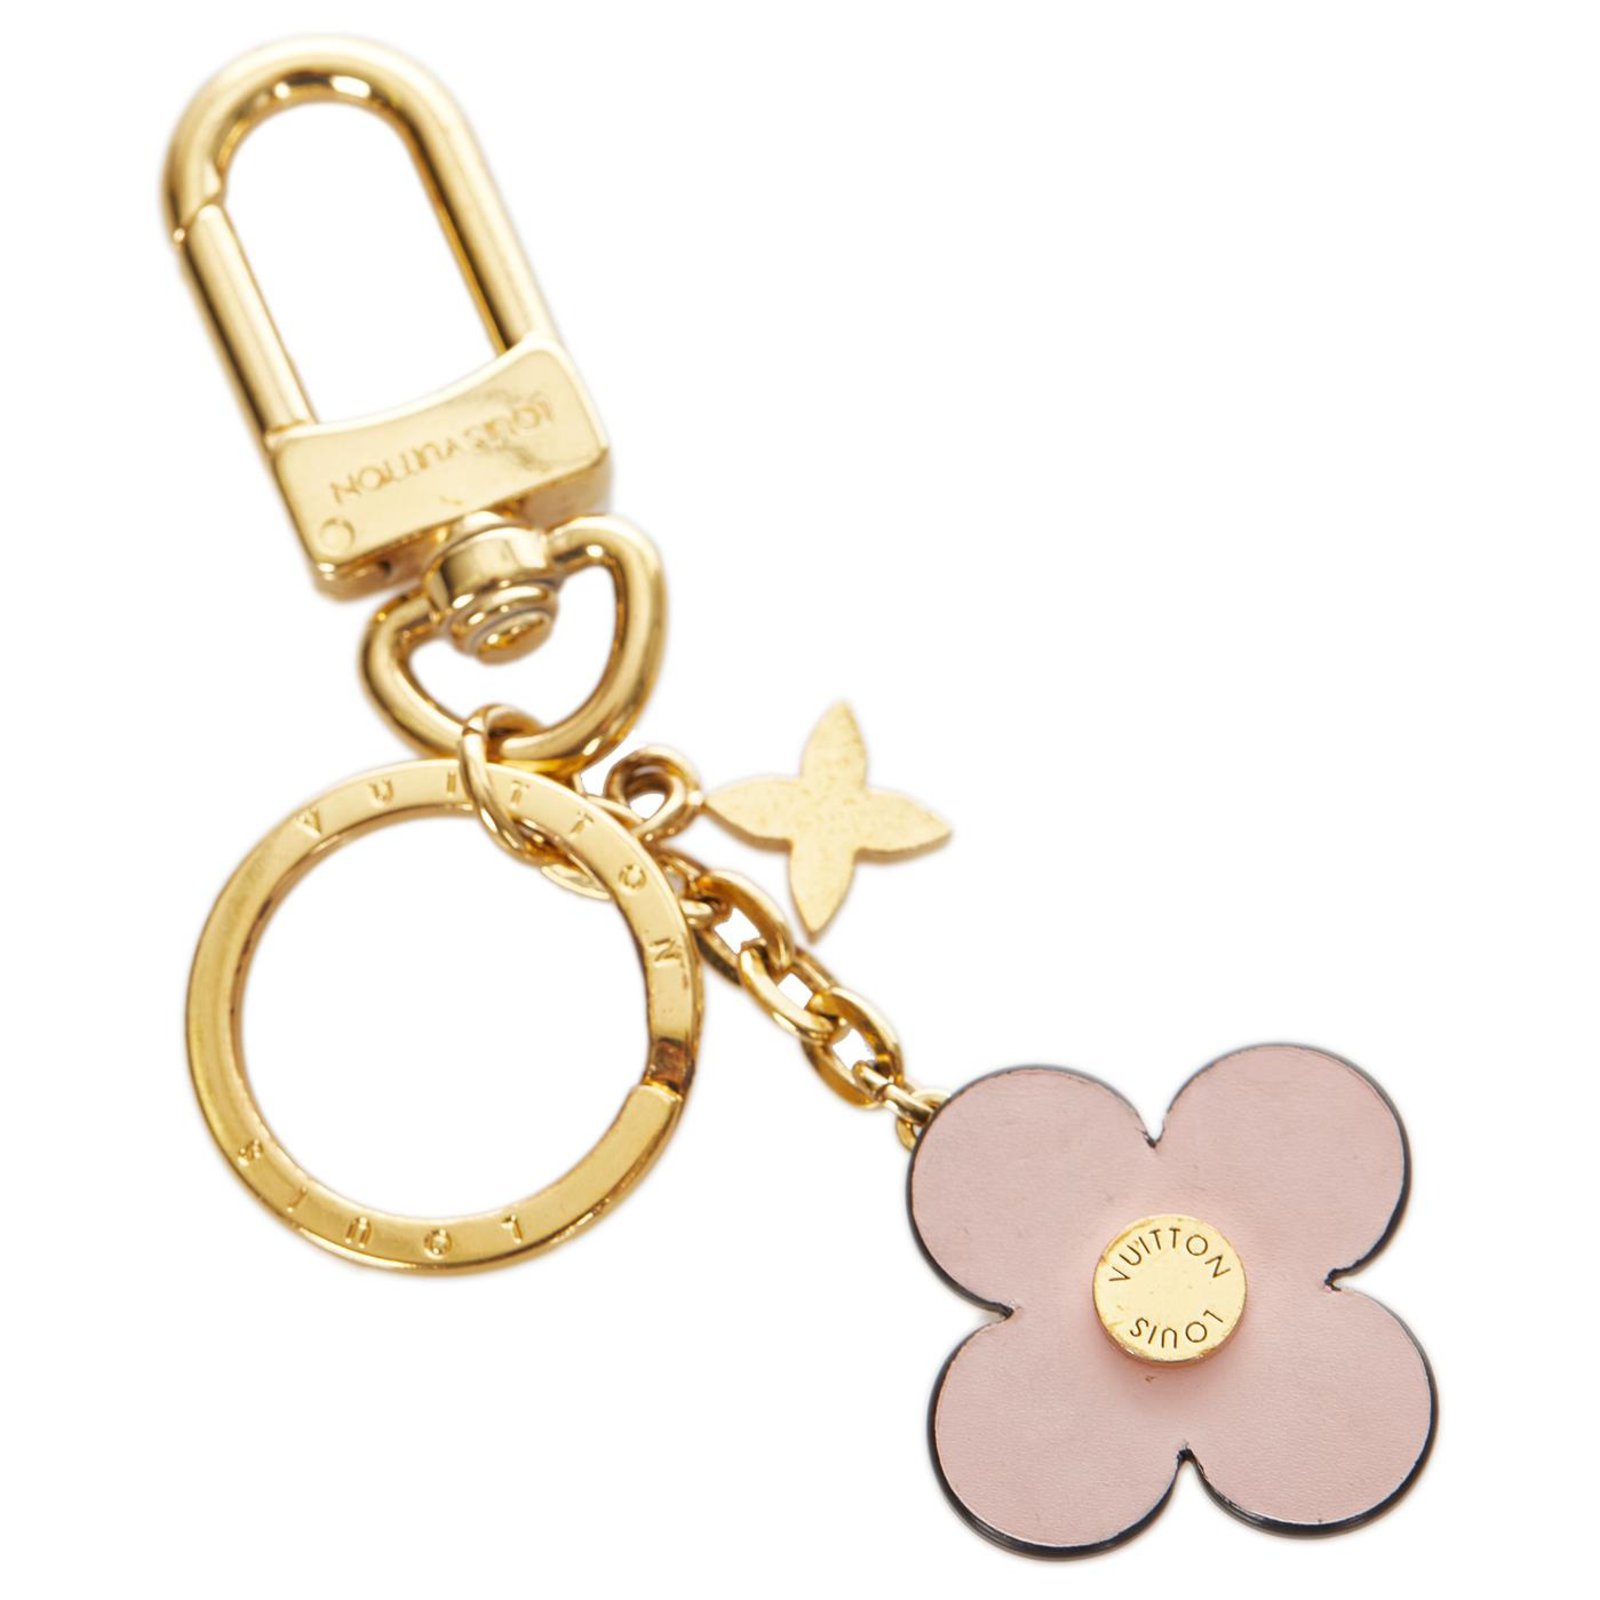 Louis Vuitton Blooming Flowers Chain Bag Charm Golden Metal